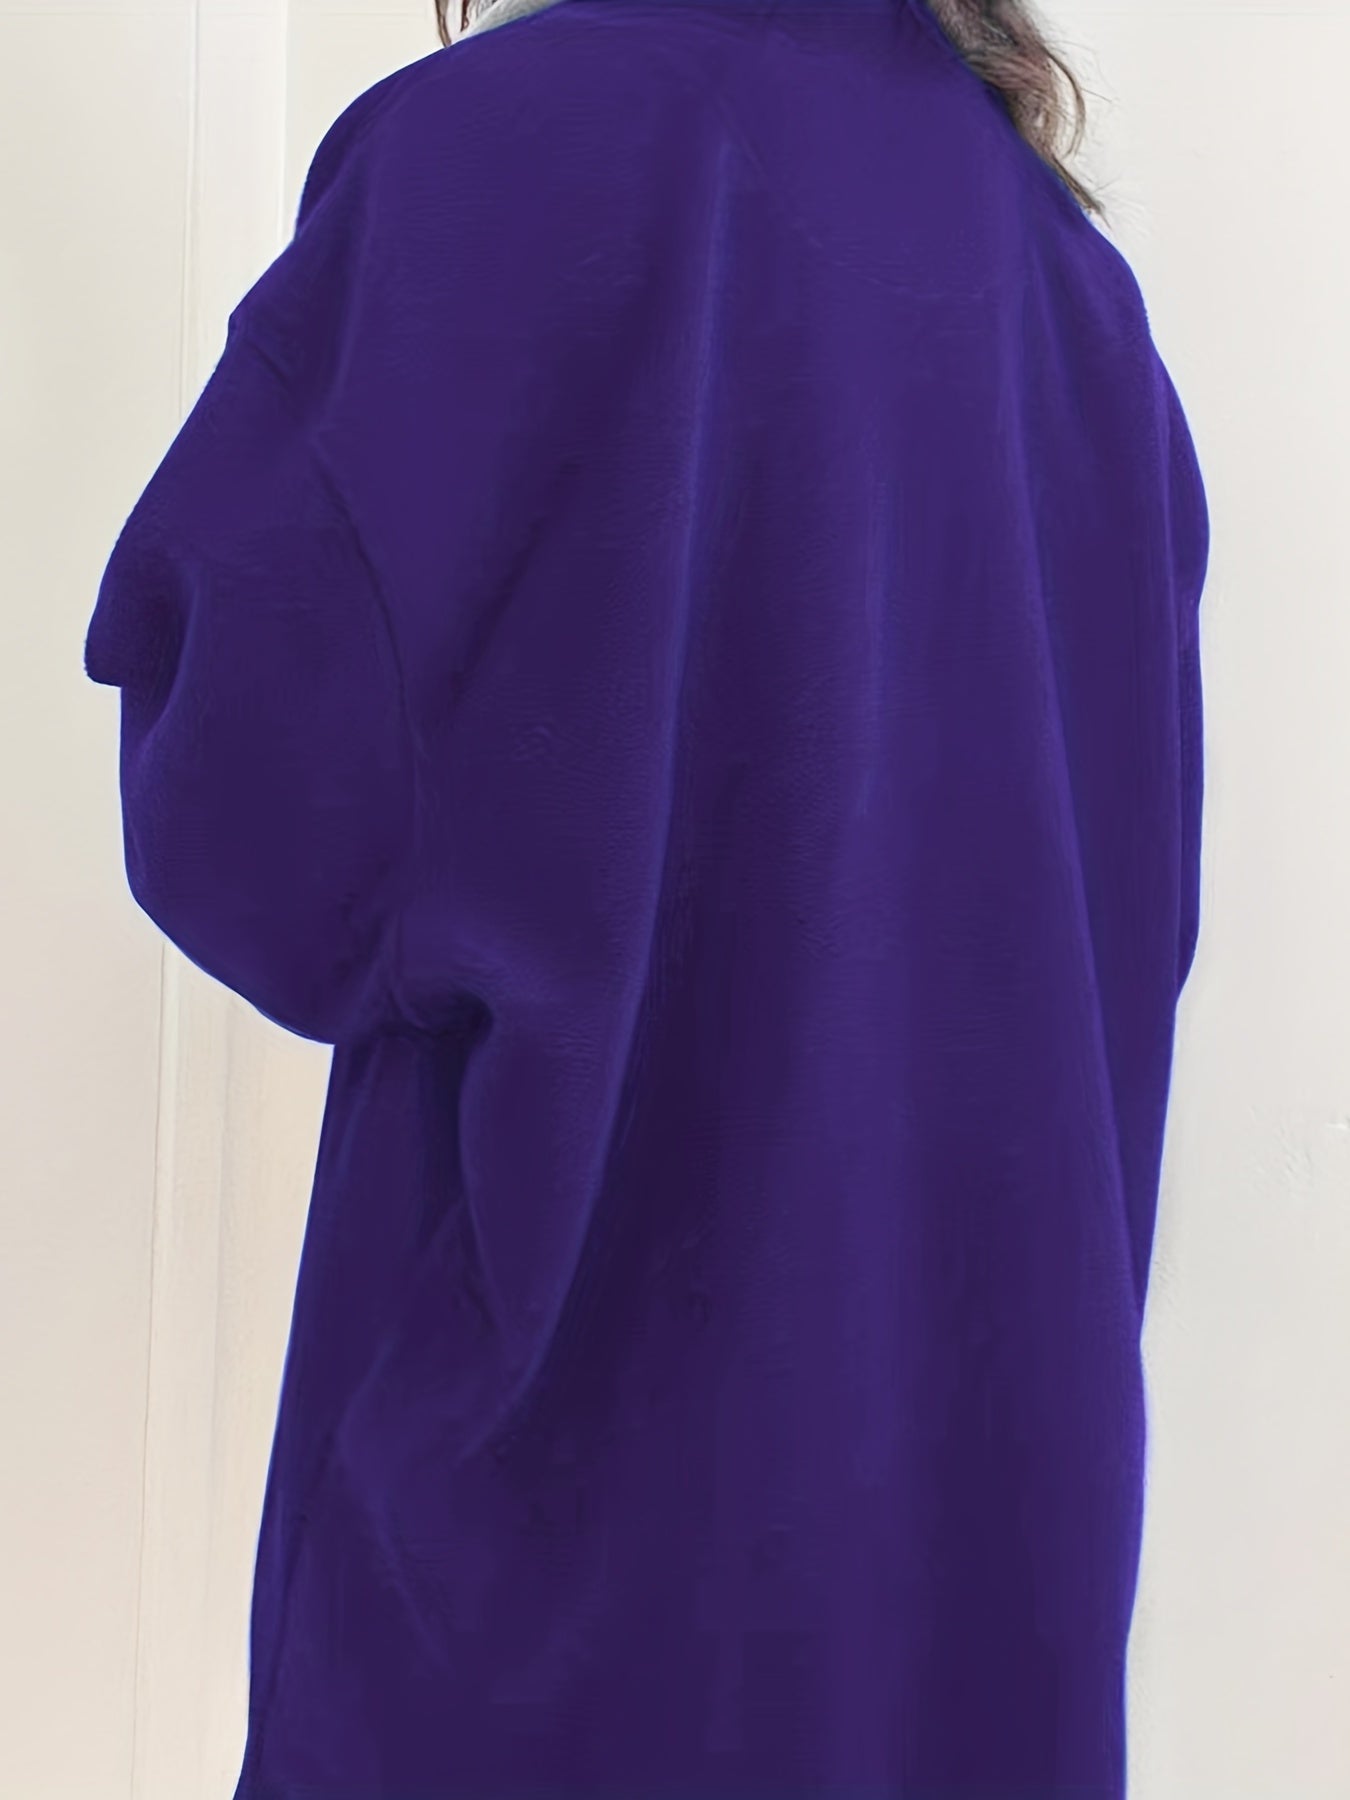 Lizakosht Retro Lapel Thermal Pullover, Casual Striped Colorblock Fashion Loose Long Sleeve Sweatshirt, Women's Clothing